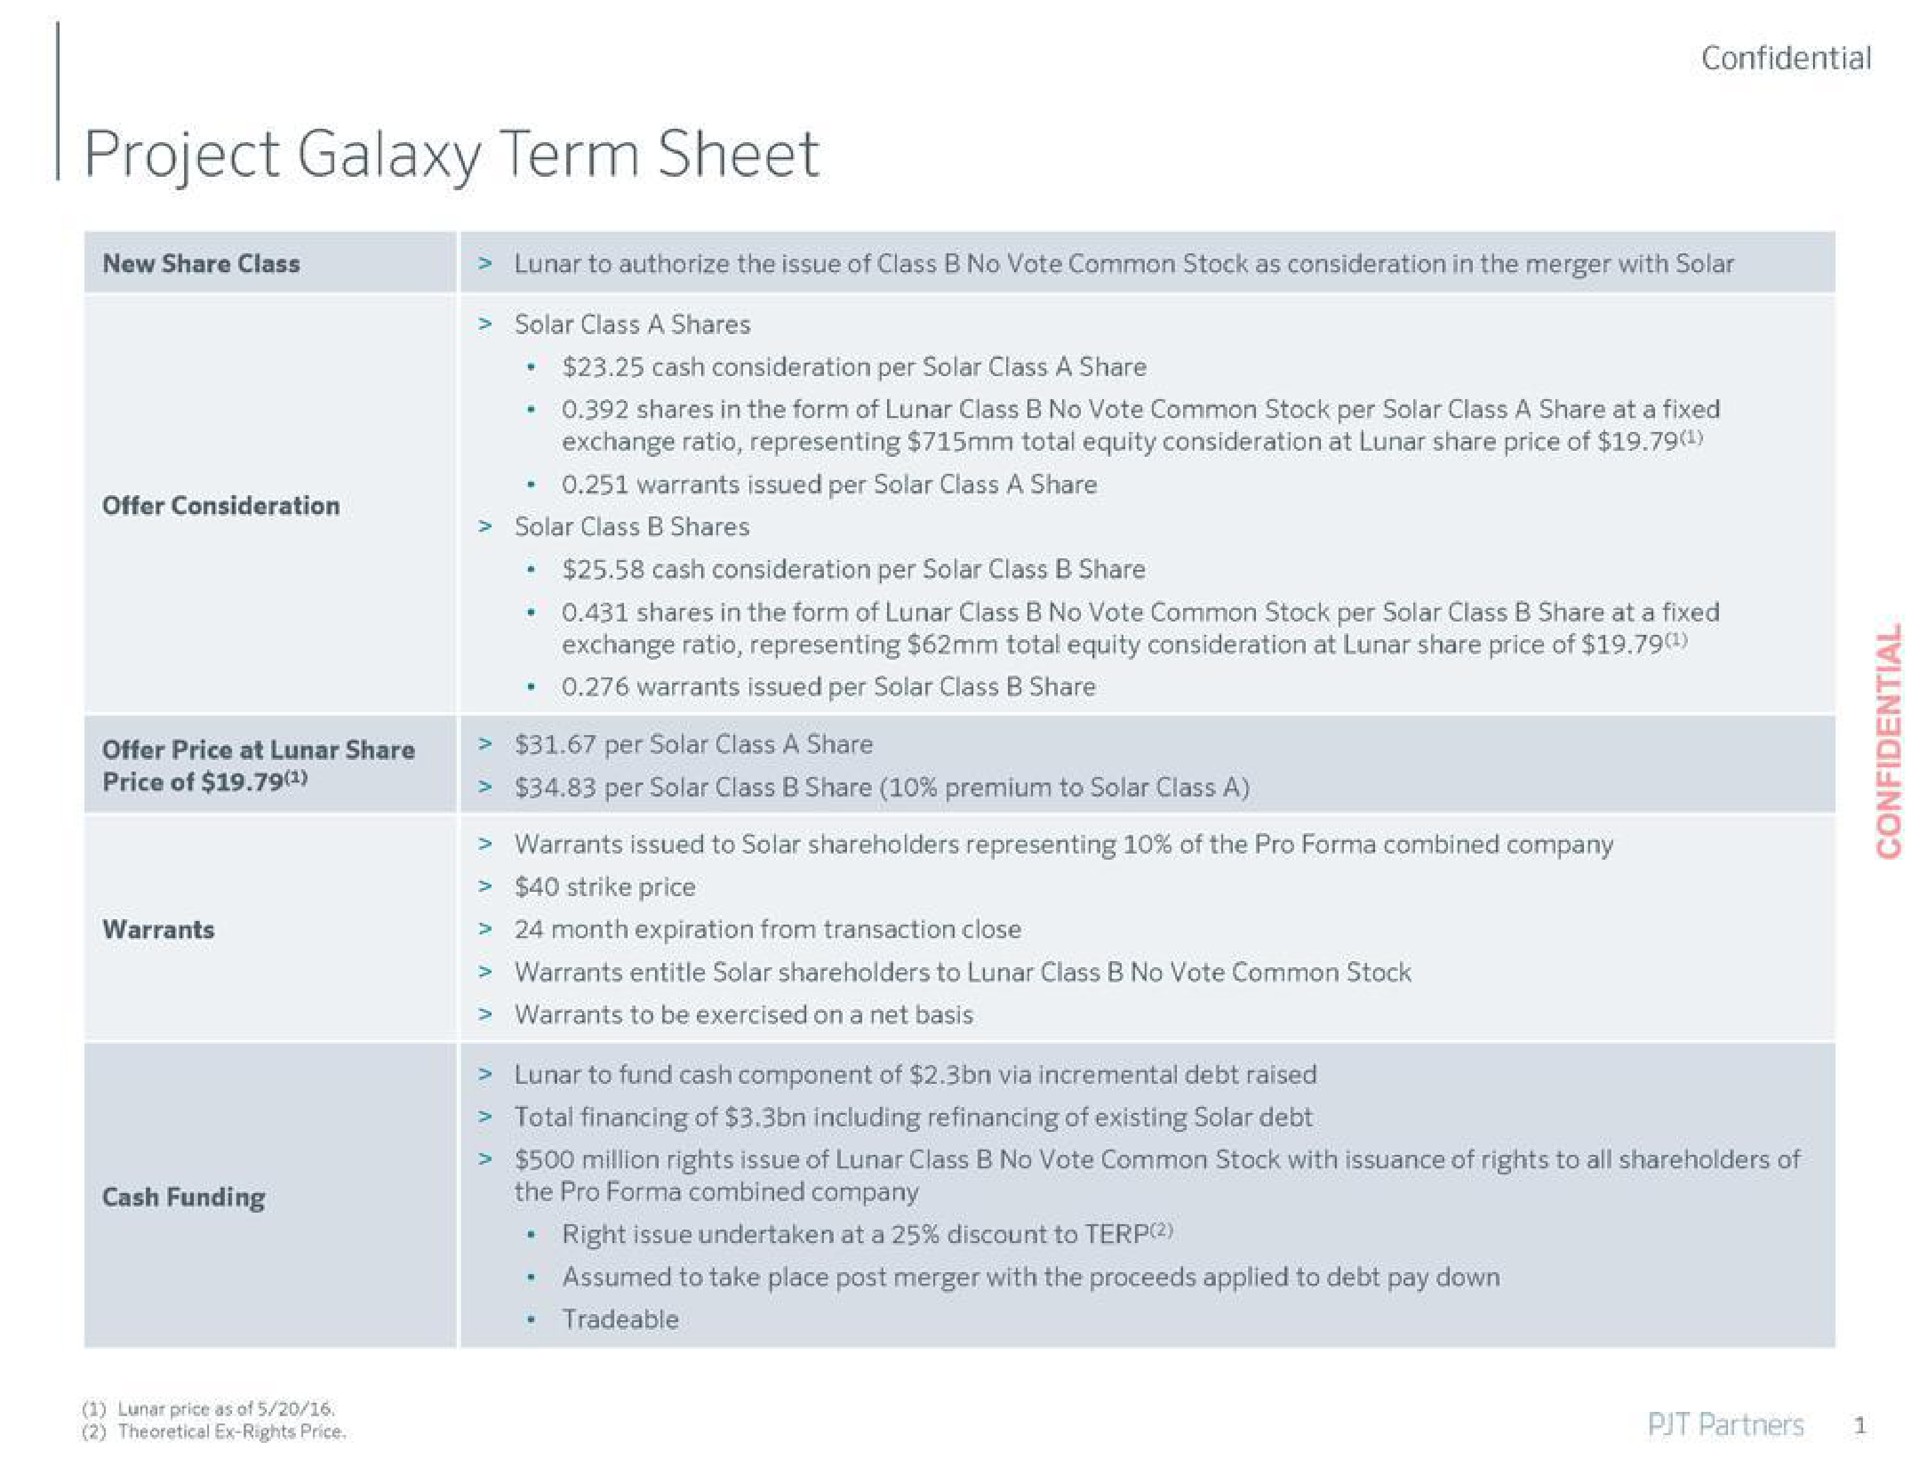 project galaxy term sheet | PJT Partners